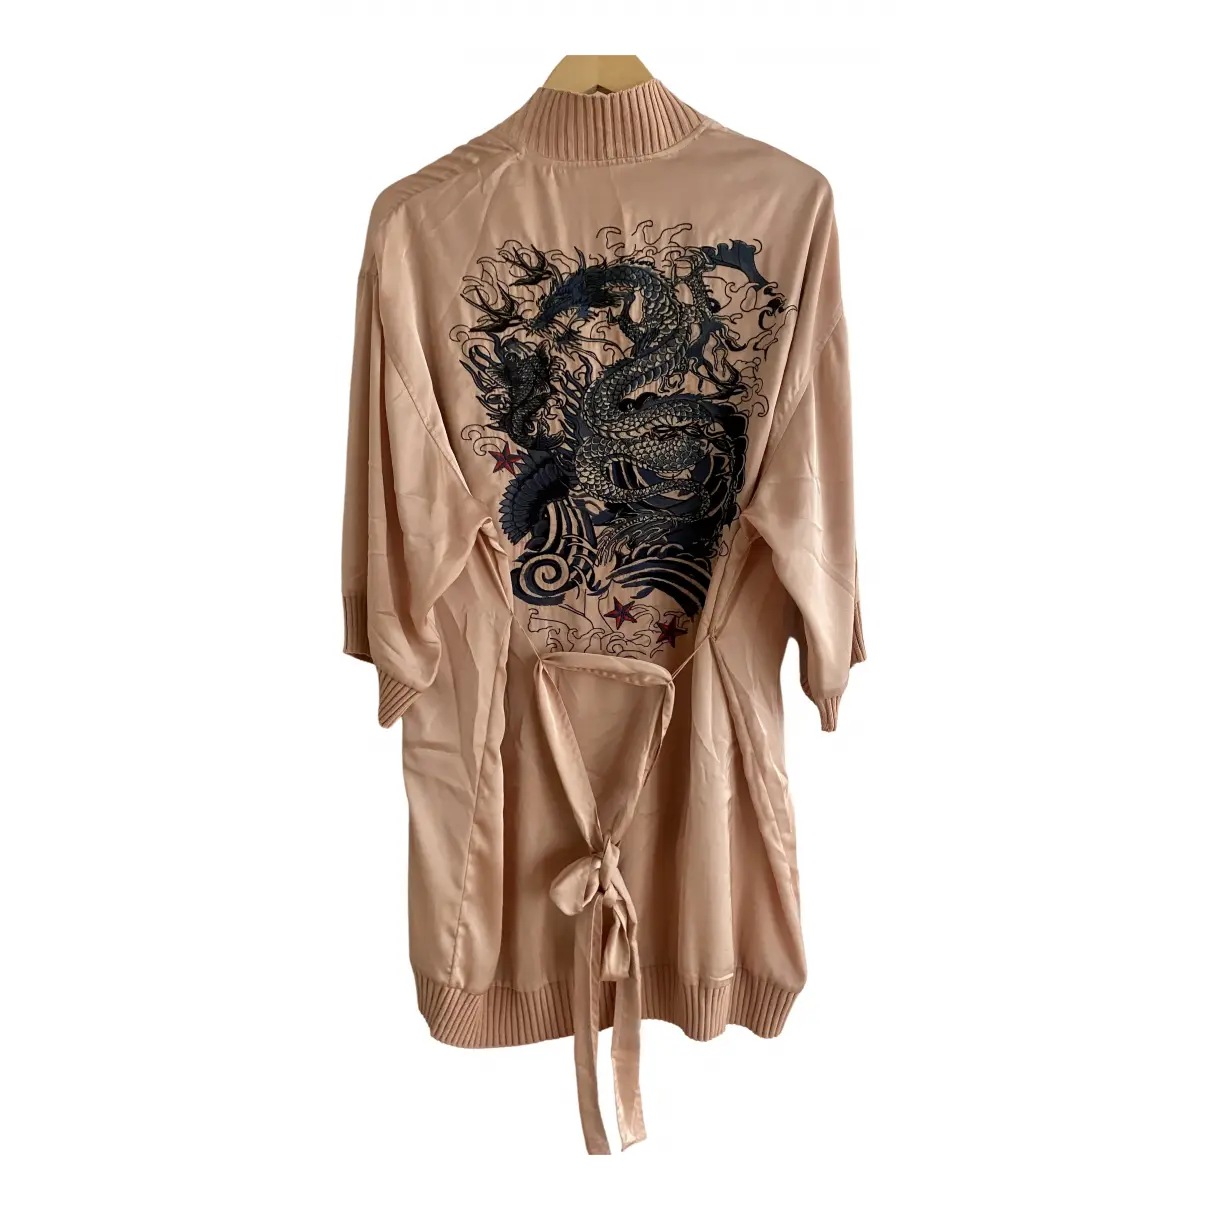 Buy Jean Paul Gaultier Jacket online